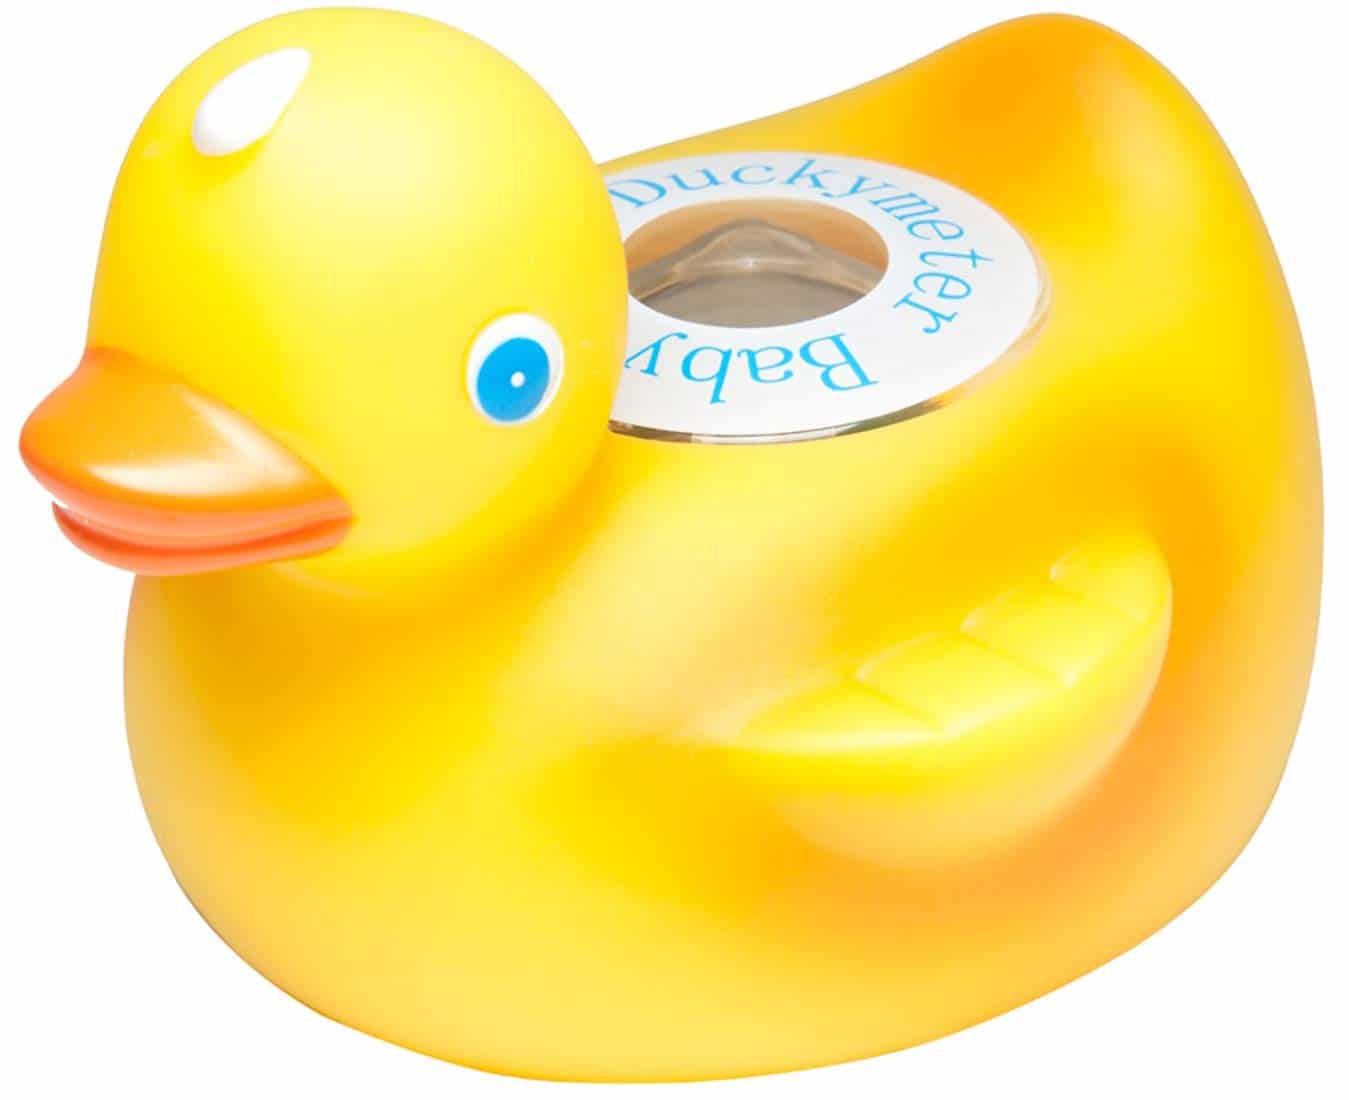 Best classic: Duckymeter Rubber duck with heat sensor